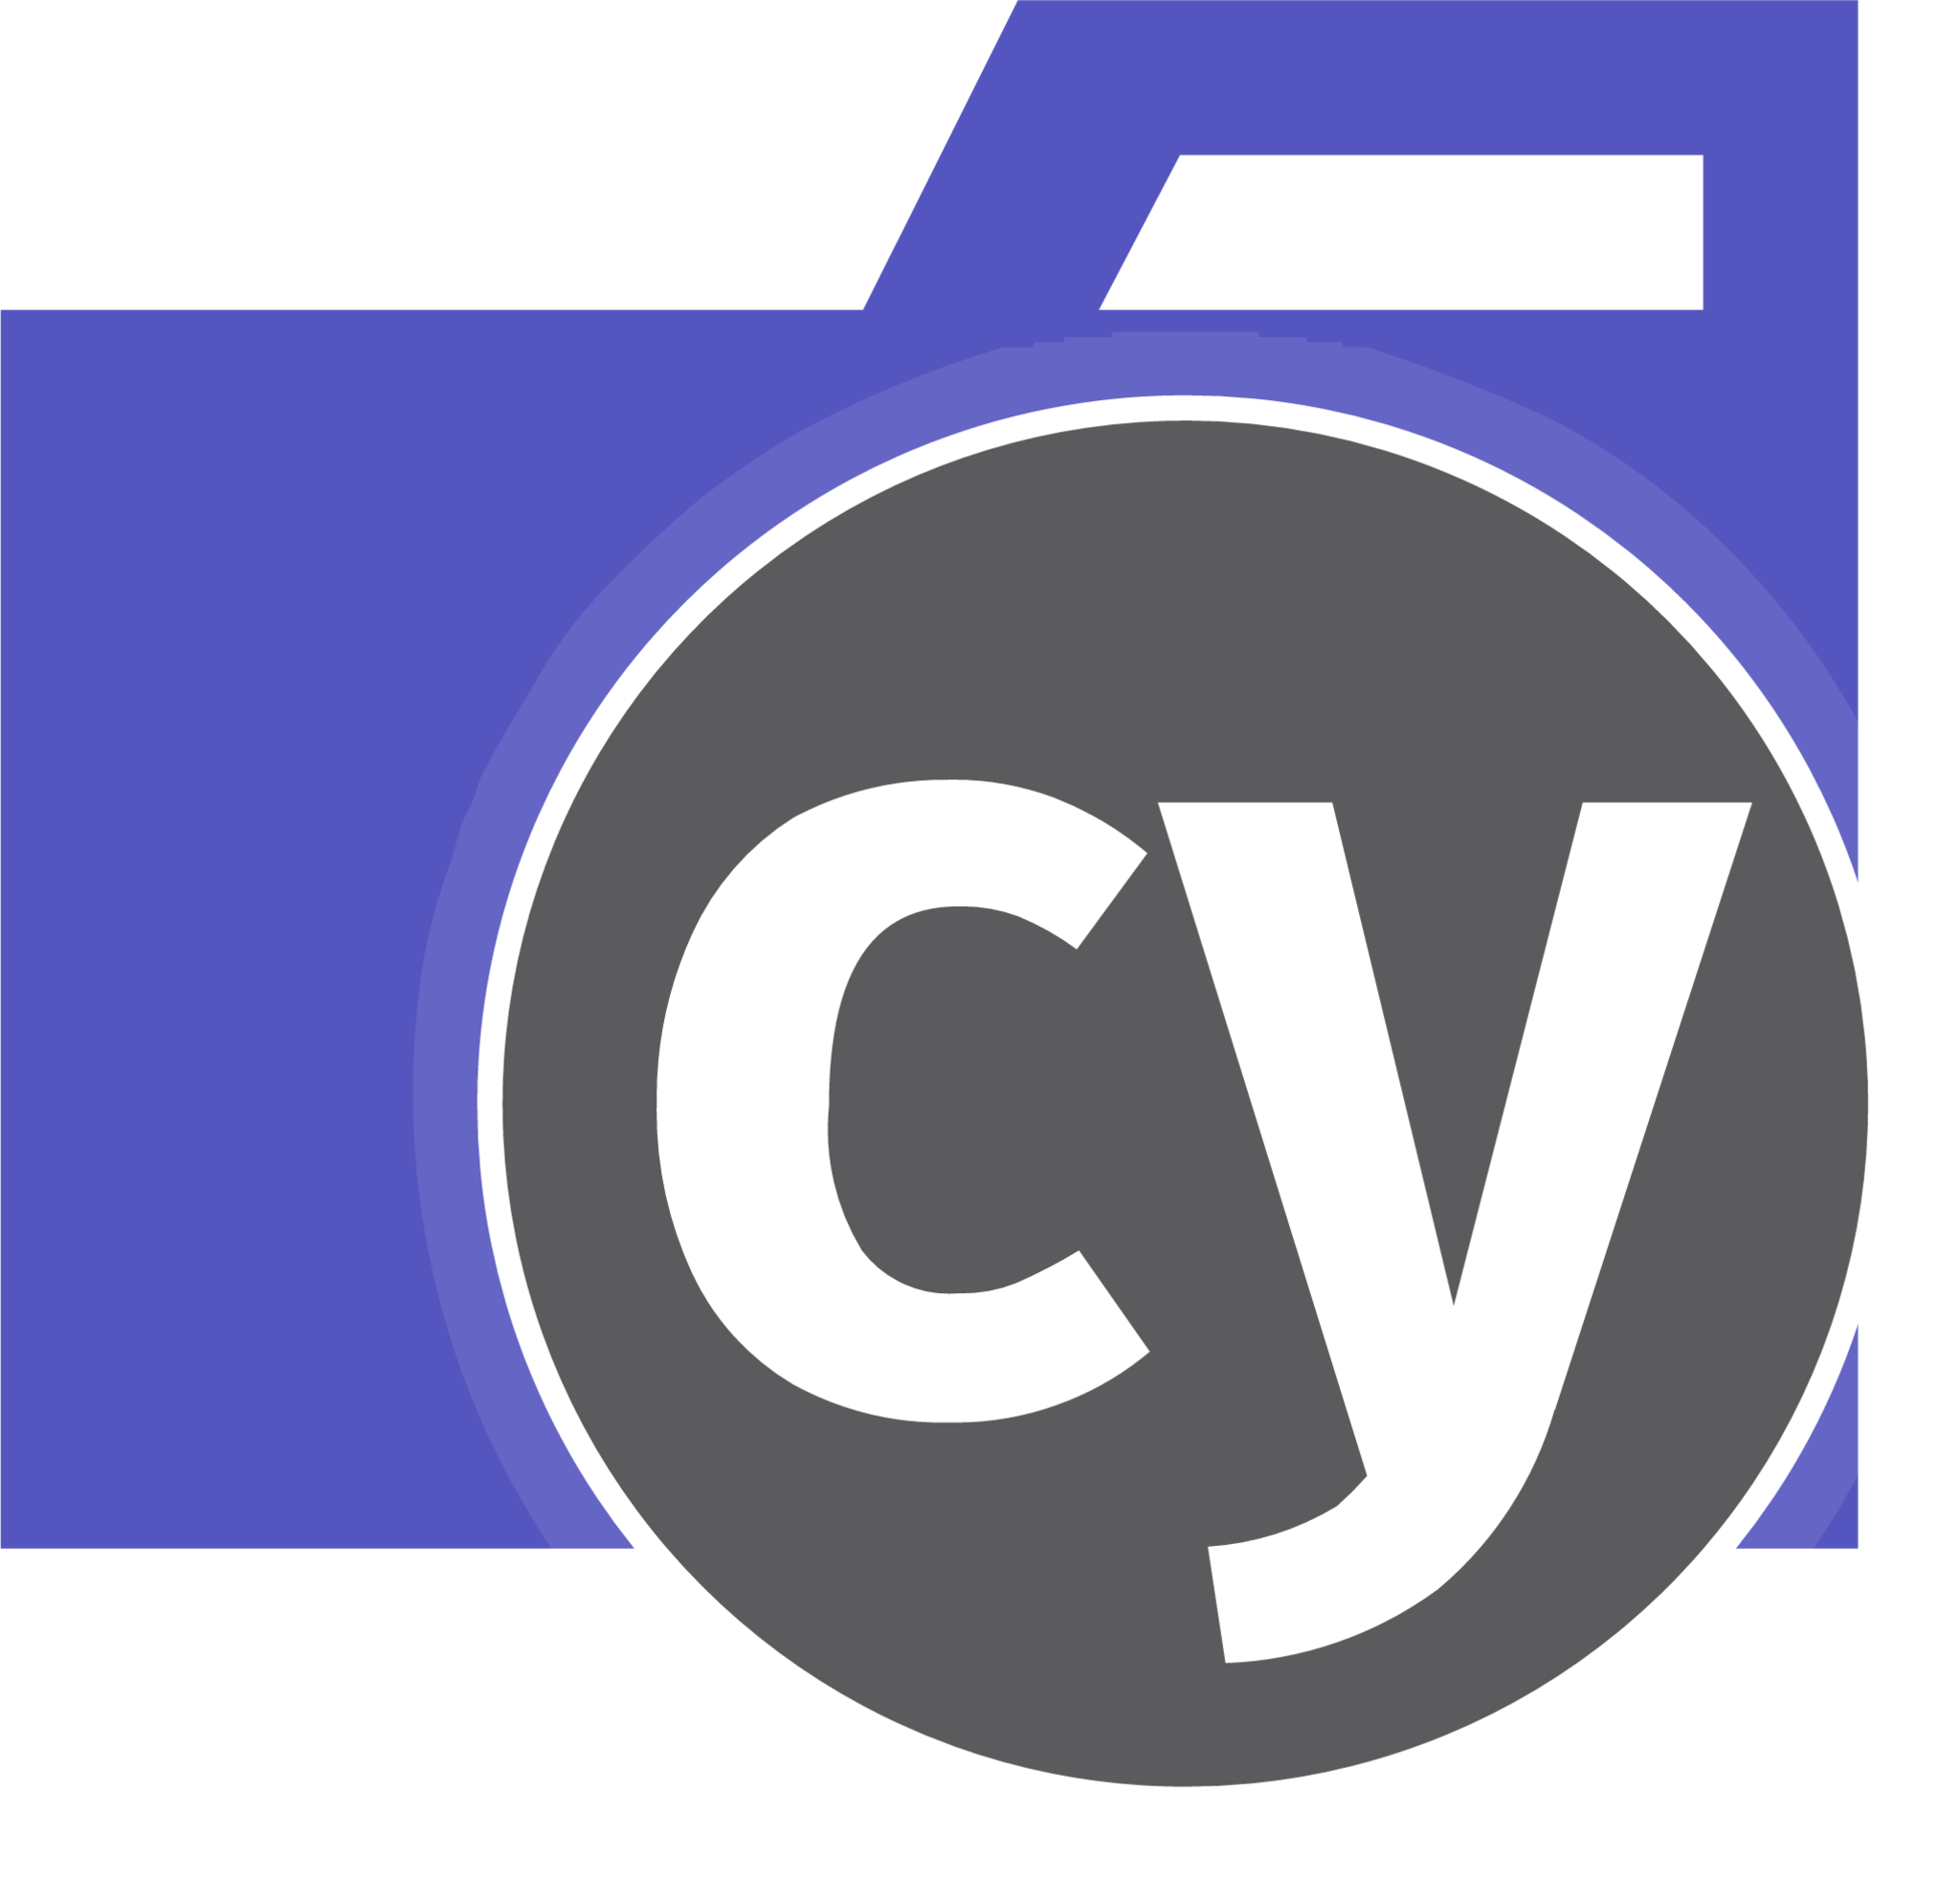 folder type cypress icon